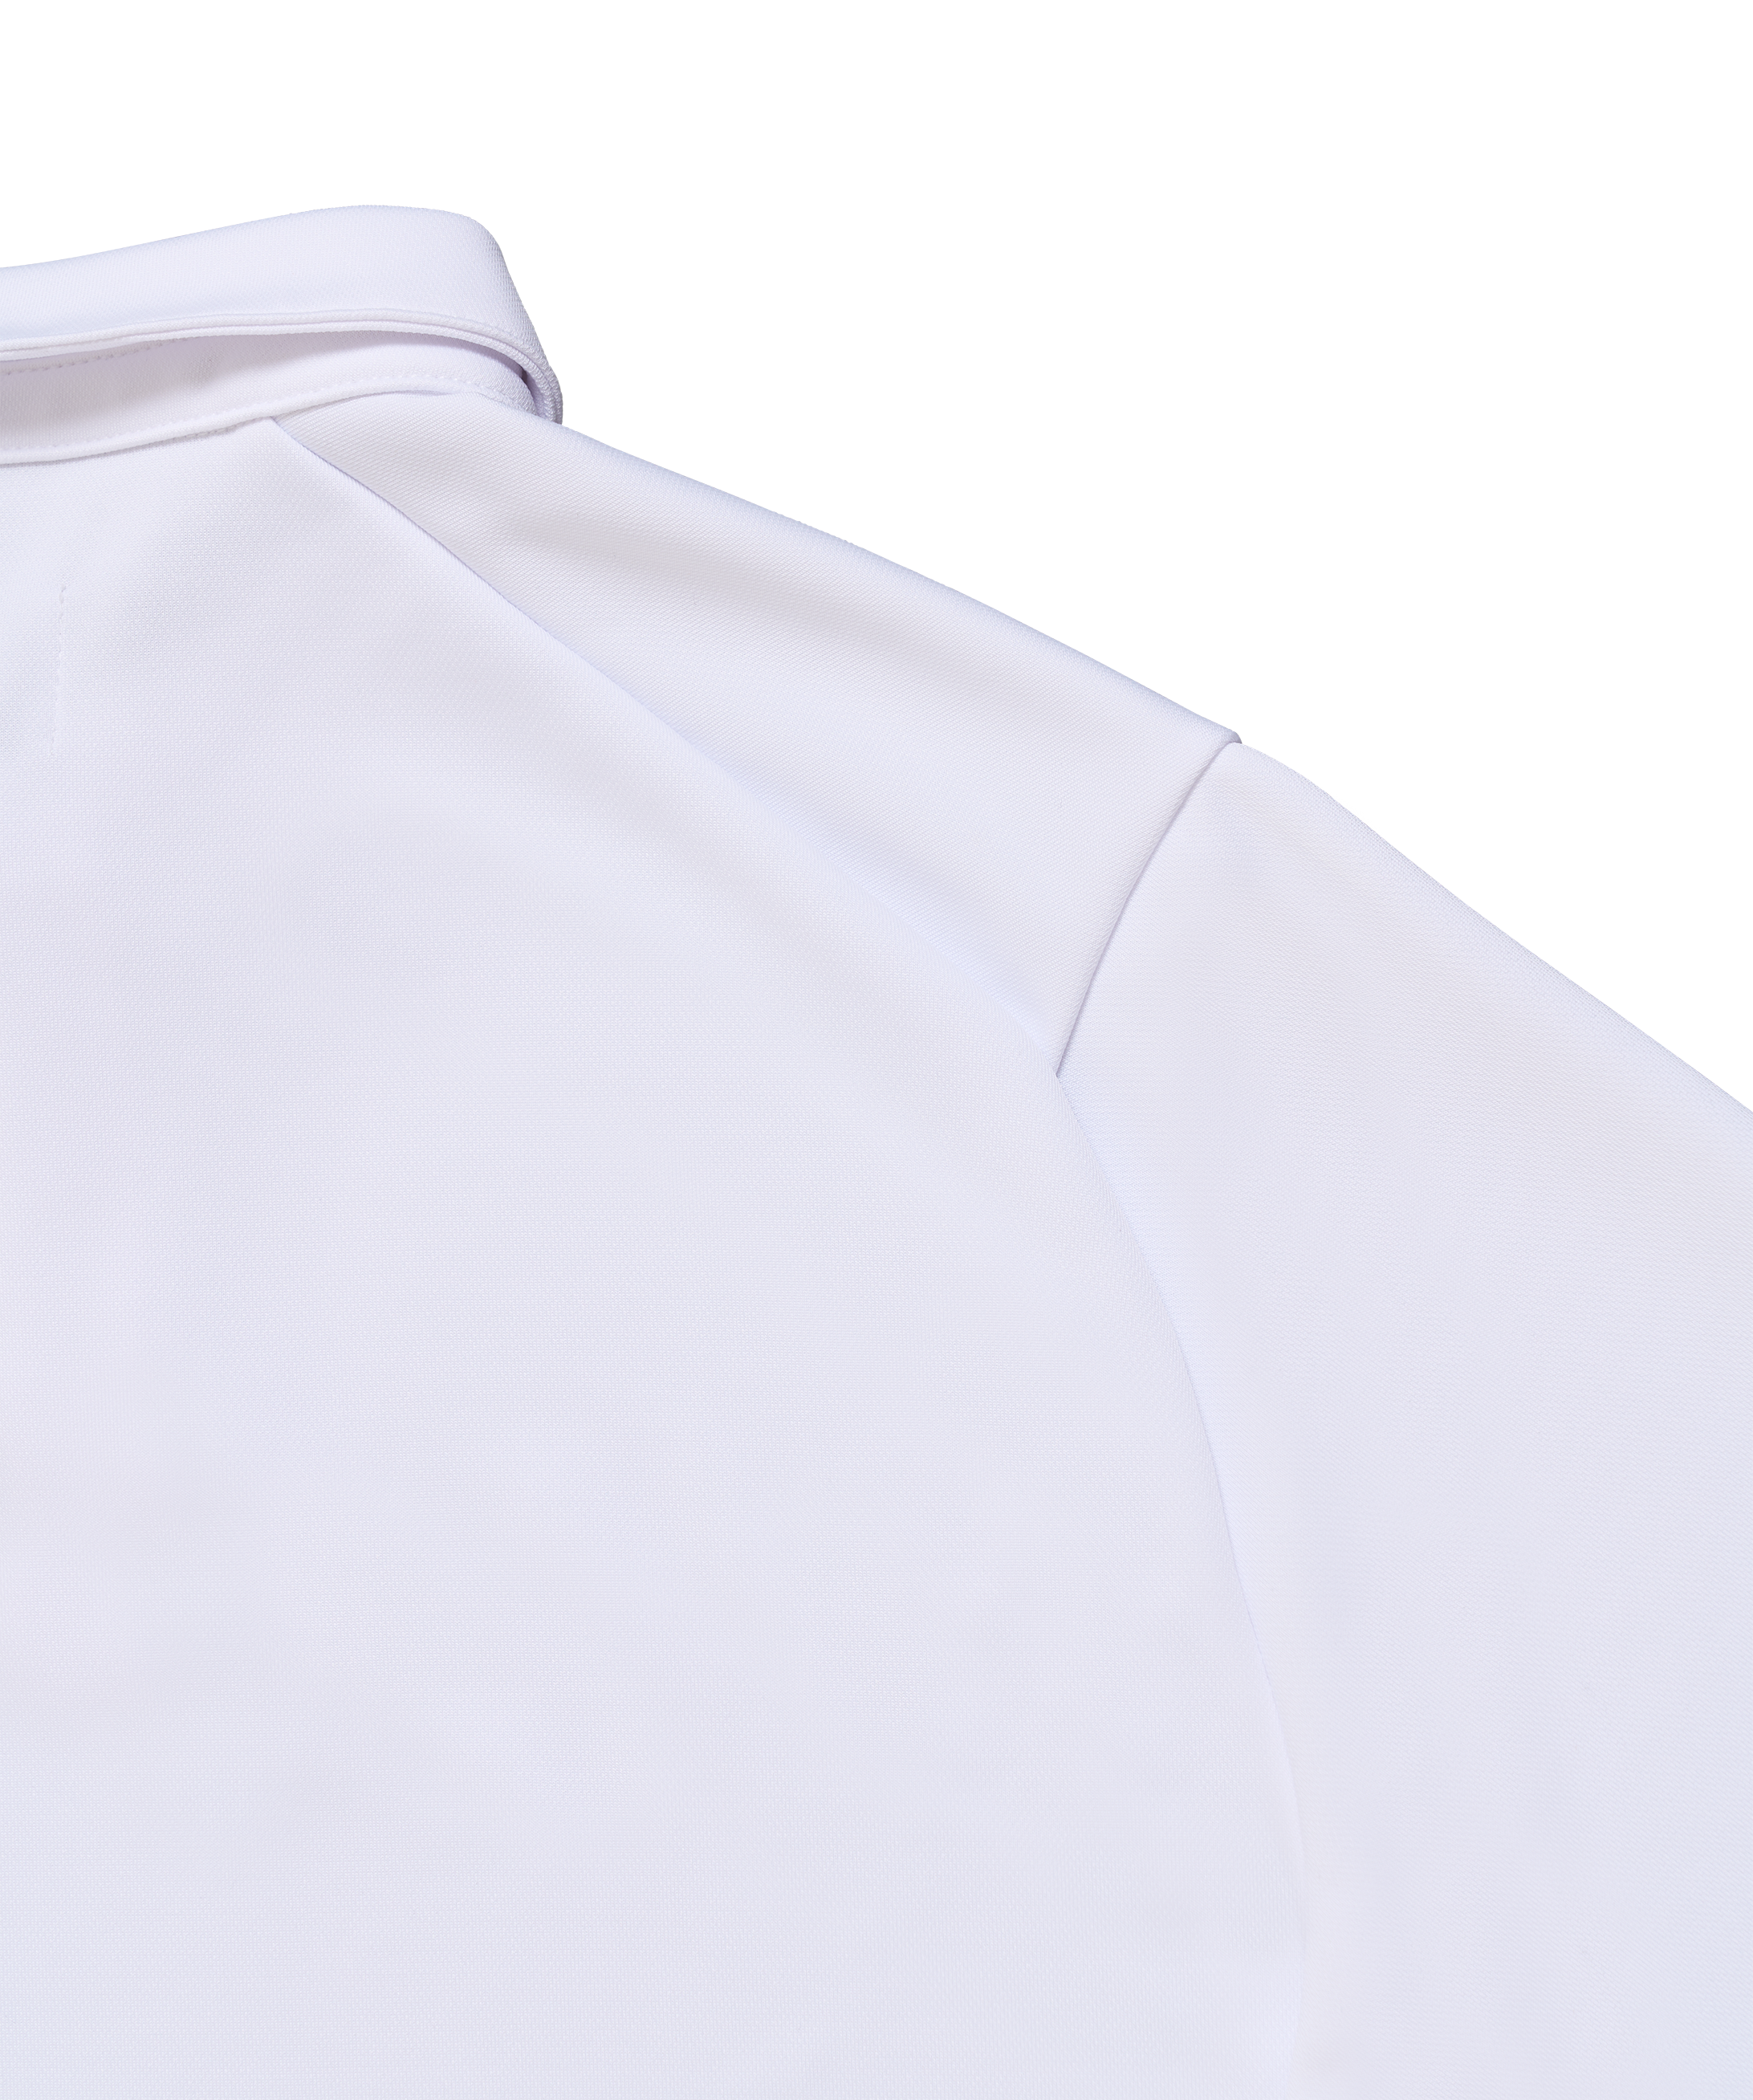 White American Polo Shirt